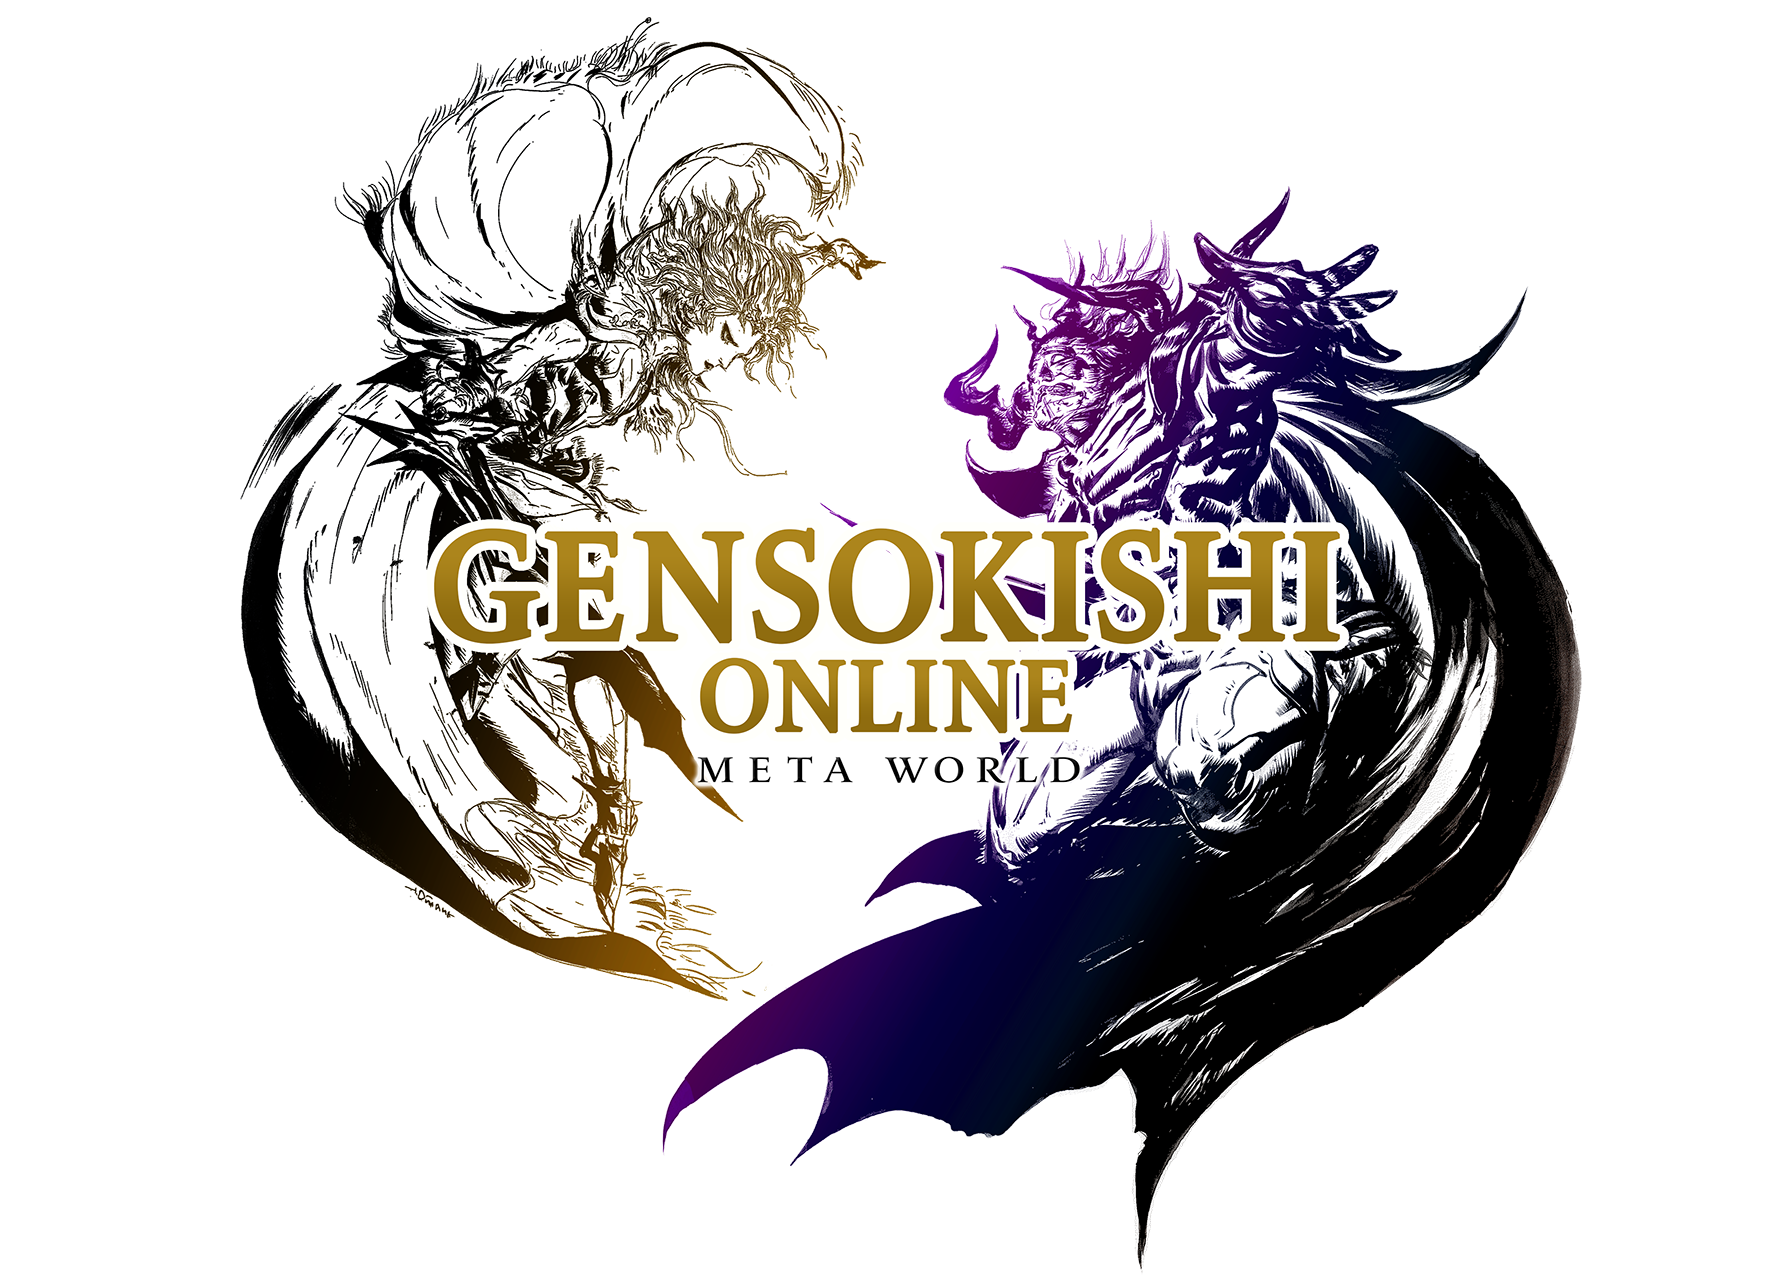 GENSOKISHI ONLINE - Metaverse × GameFi Project